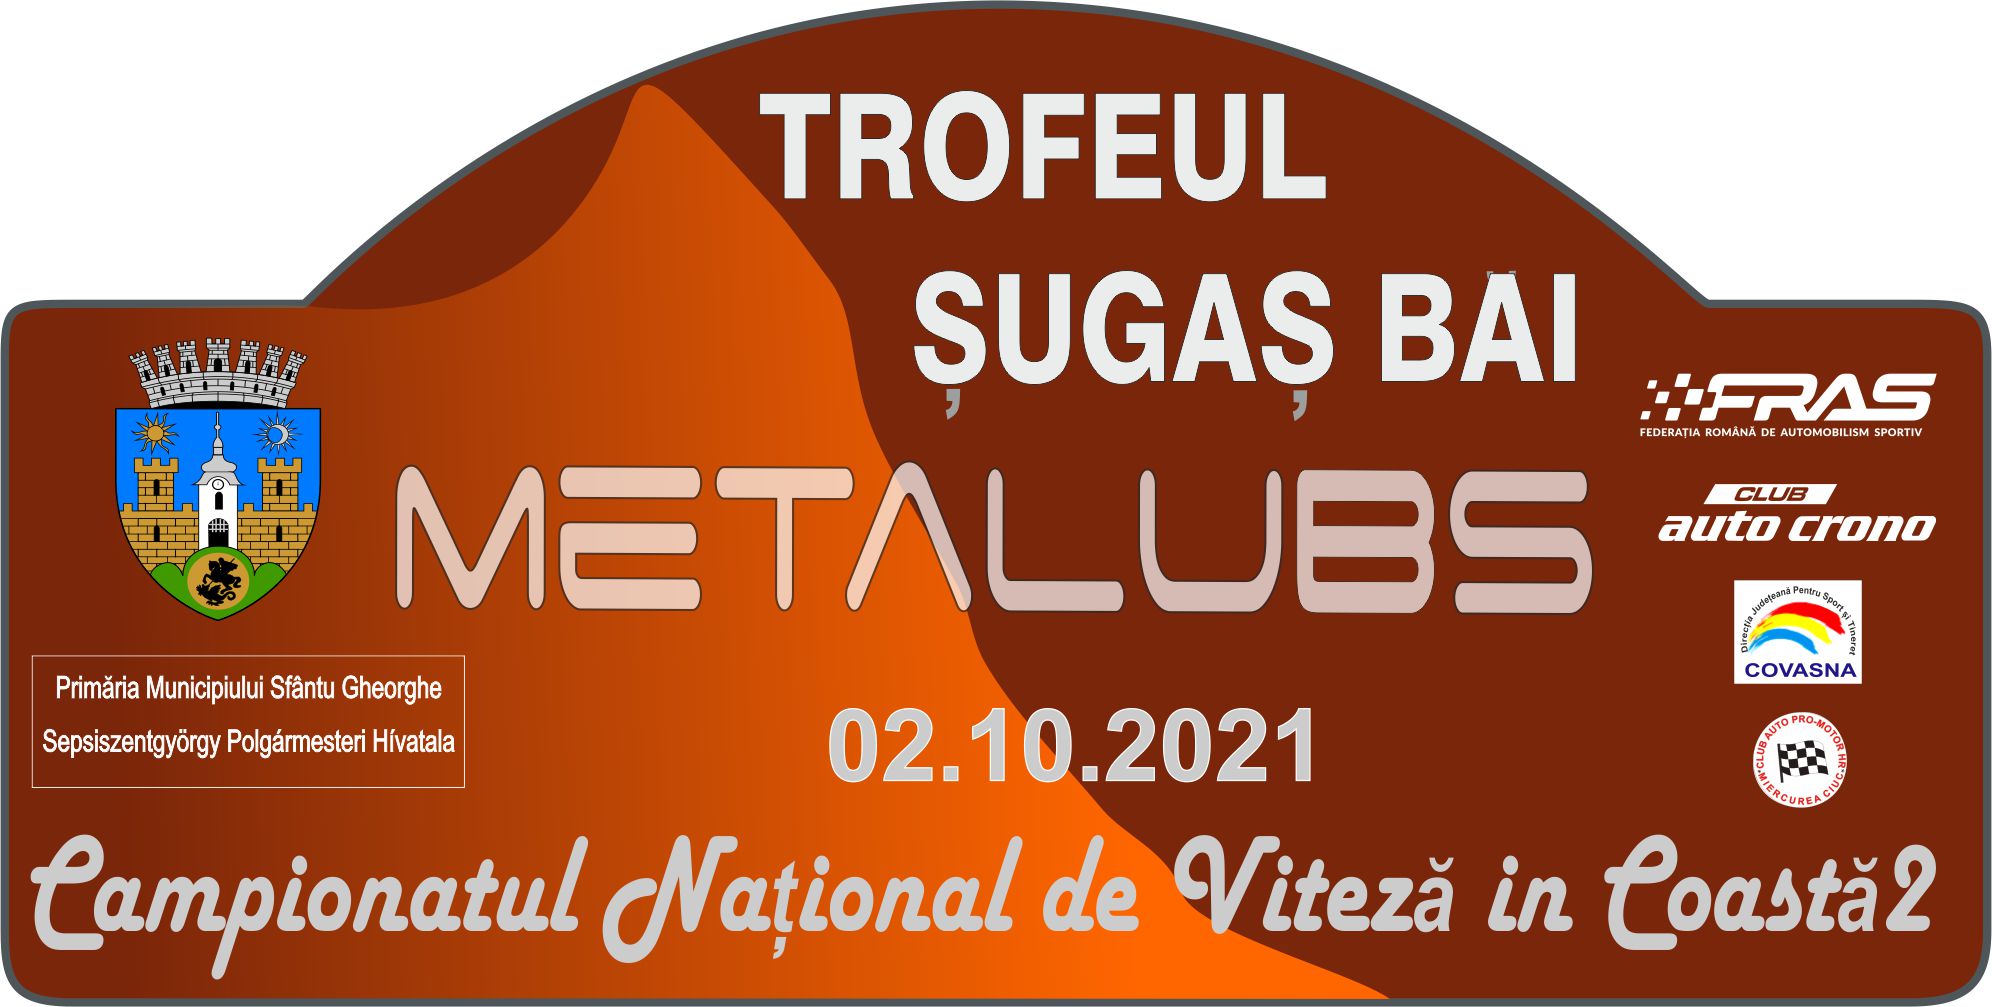 Campionatul National de Viteza in Coasta2 METALUBS Sugas Bai